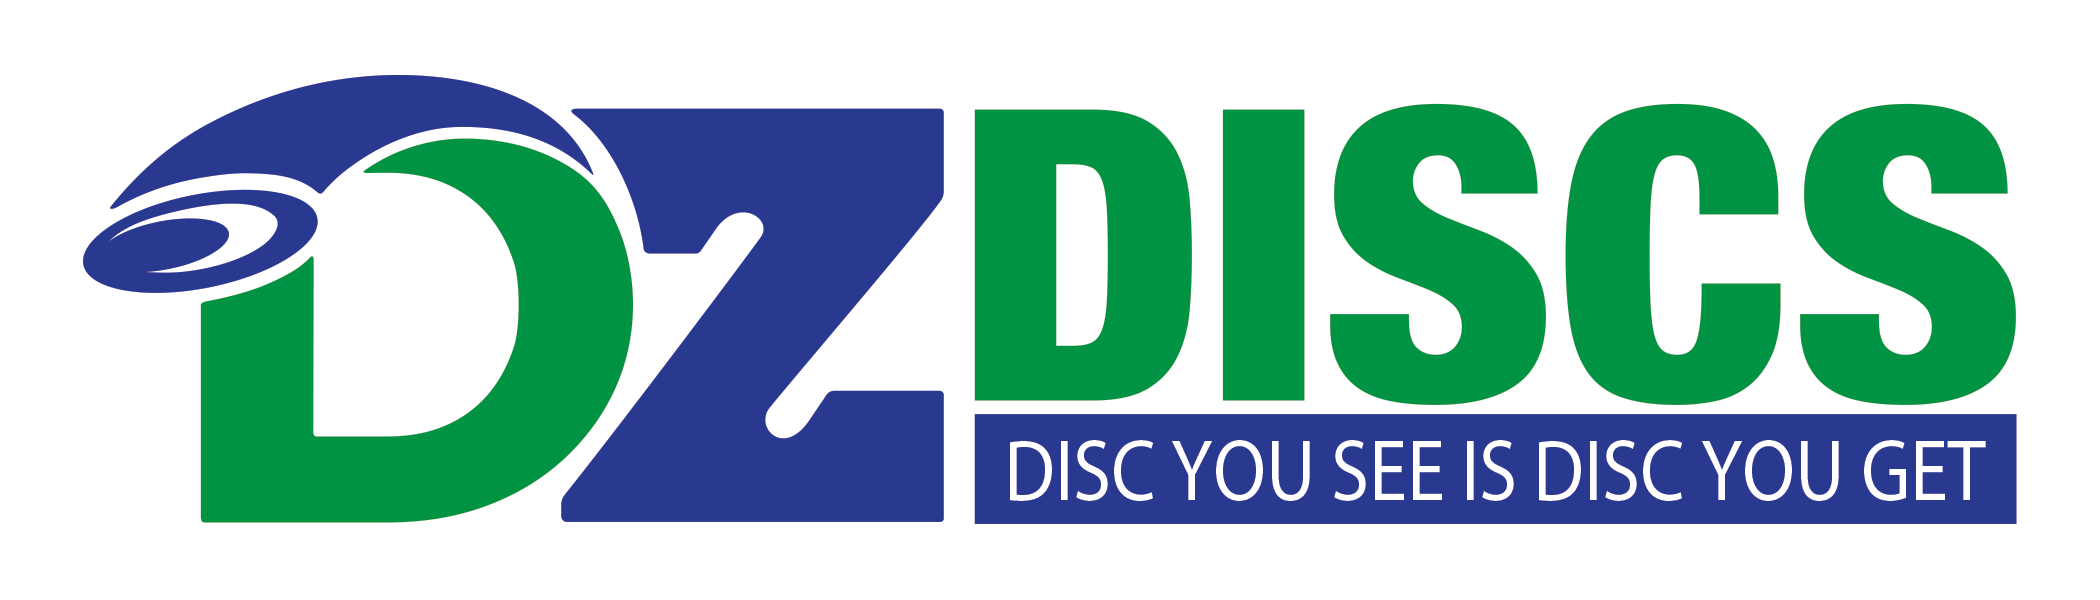 Drop Zone Disc Golf  (DZDiscs)